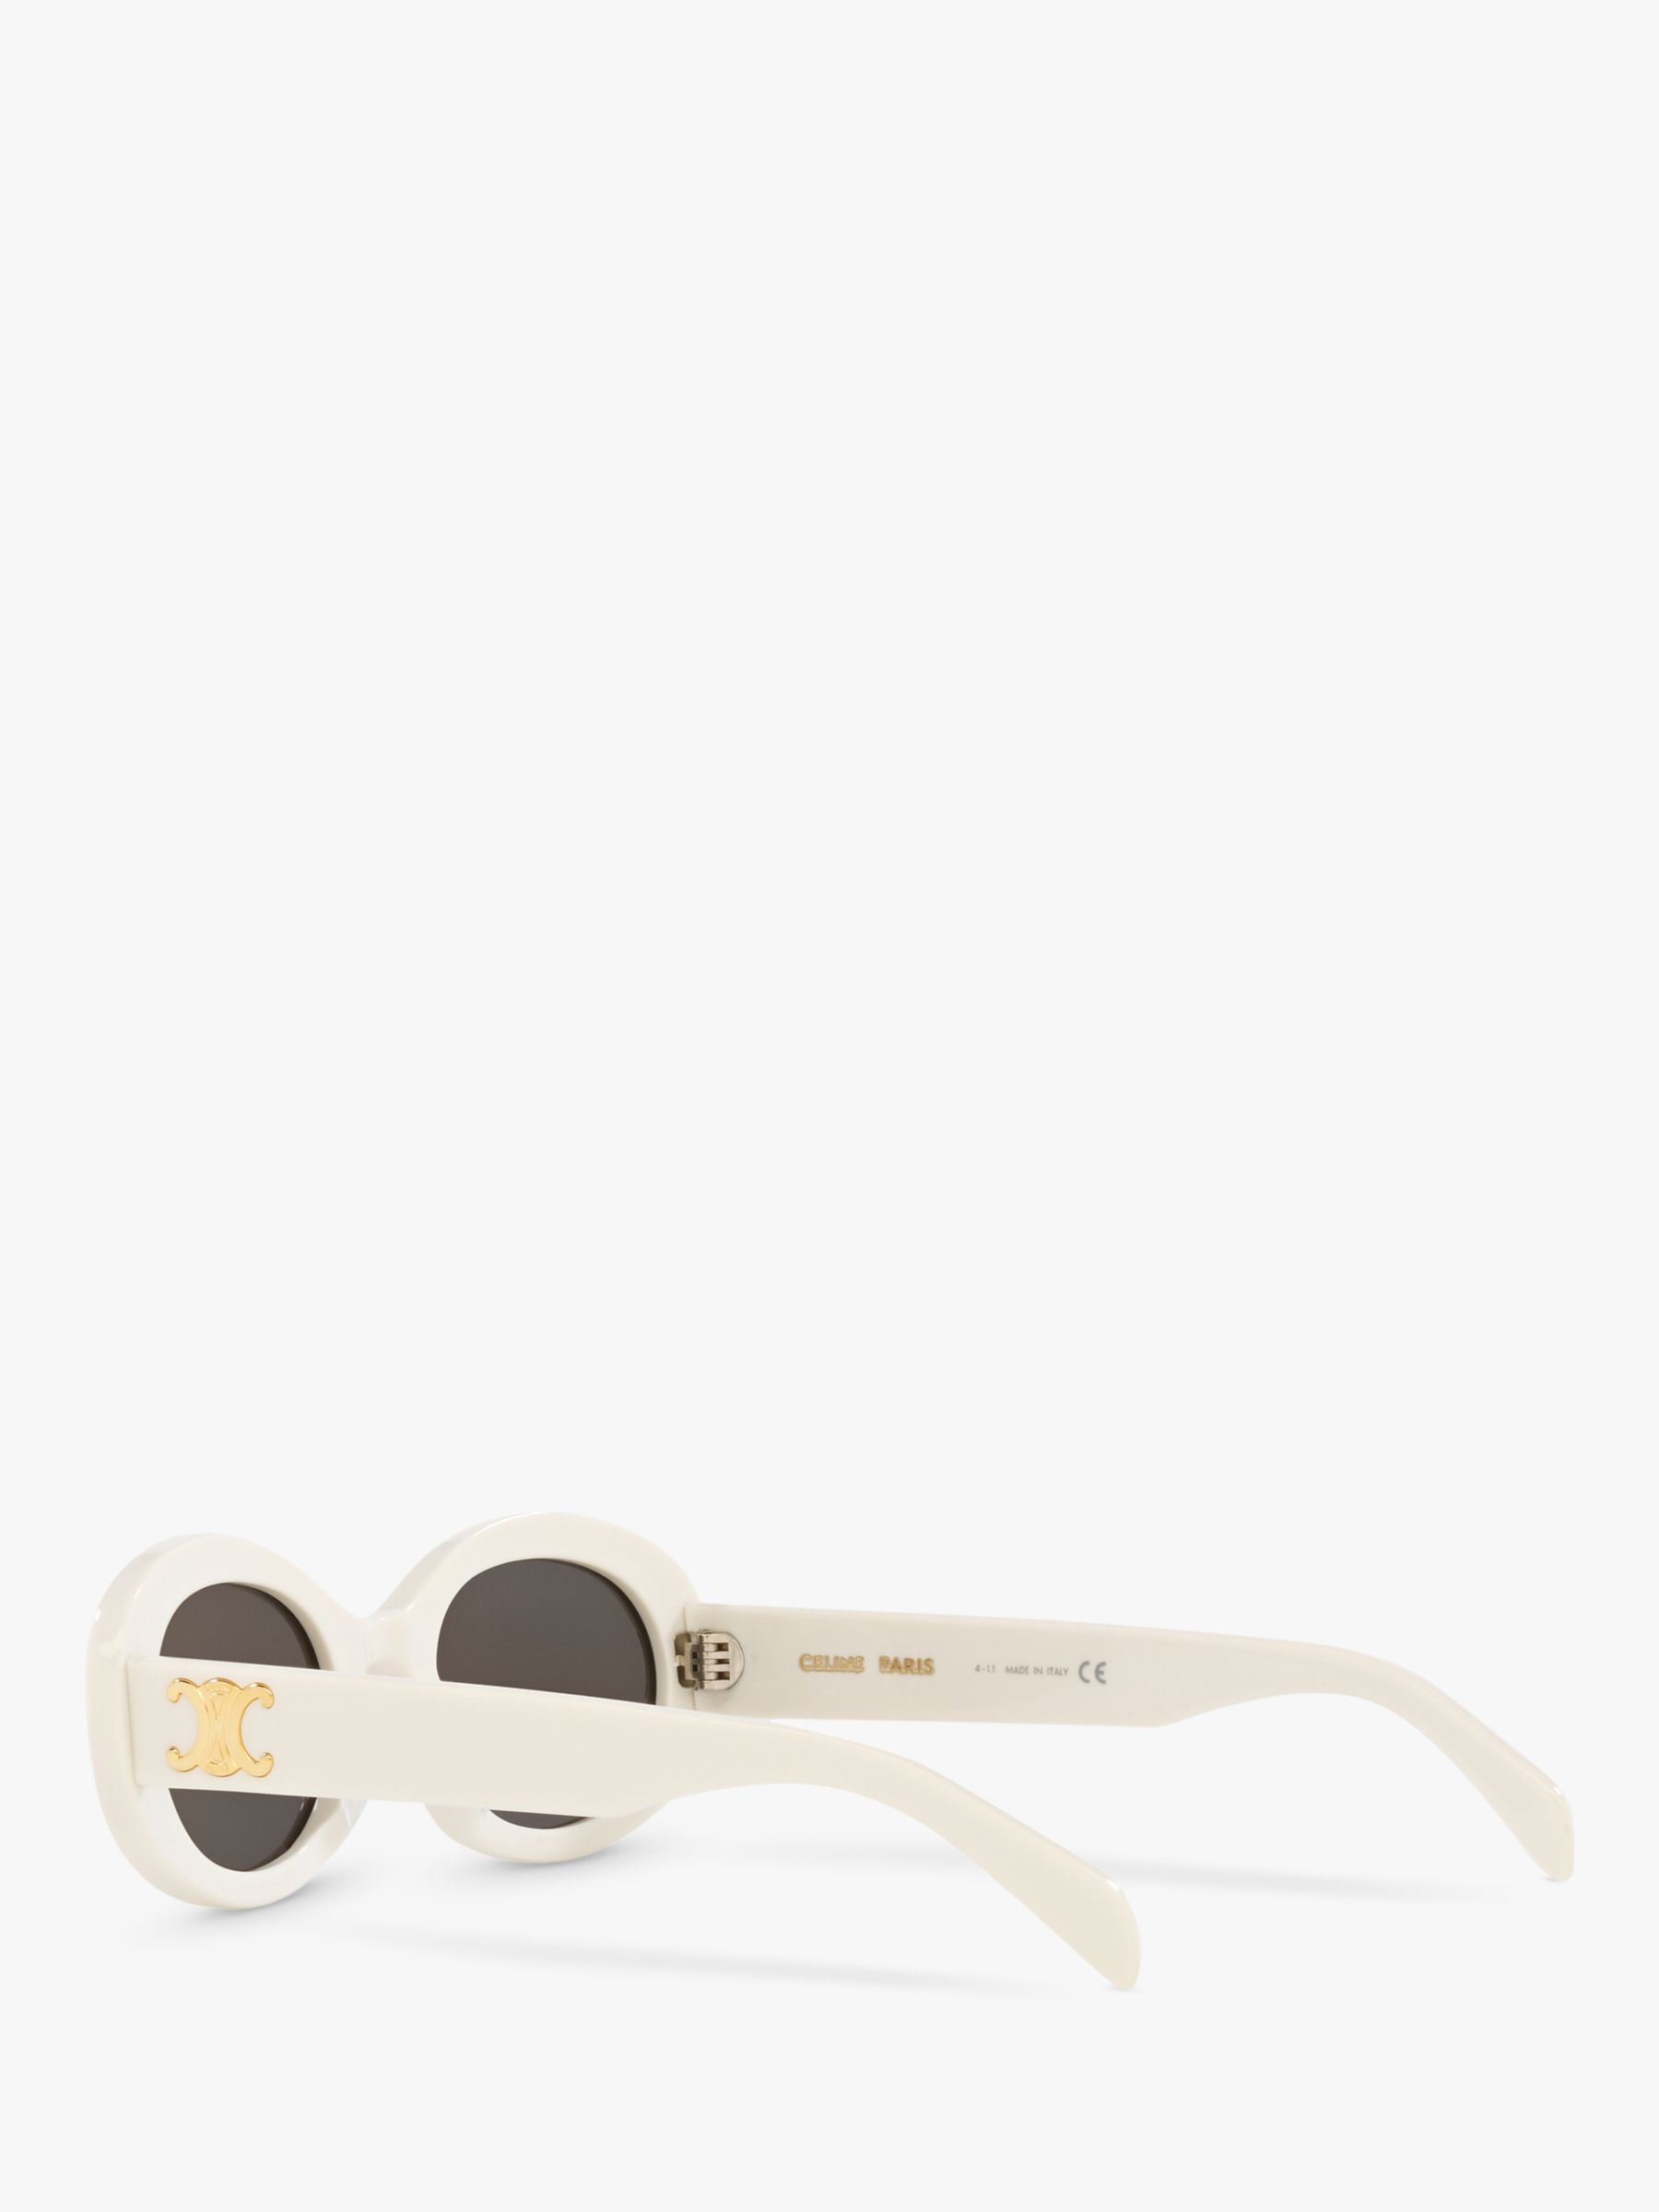 Celine CL40194U Unisex Oval Sunglasses, Ivory/Grey at John Lewis & Partners